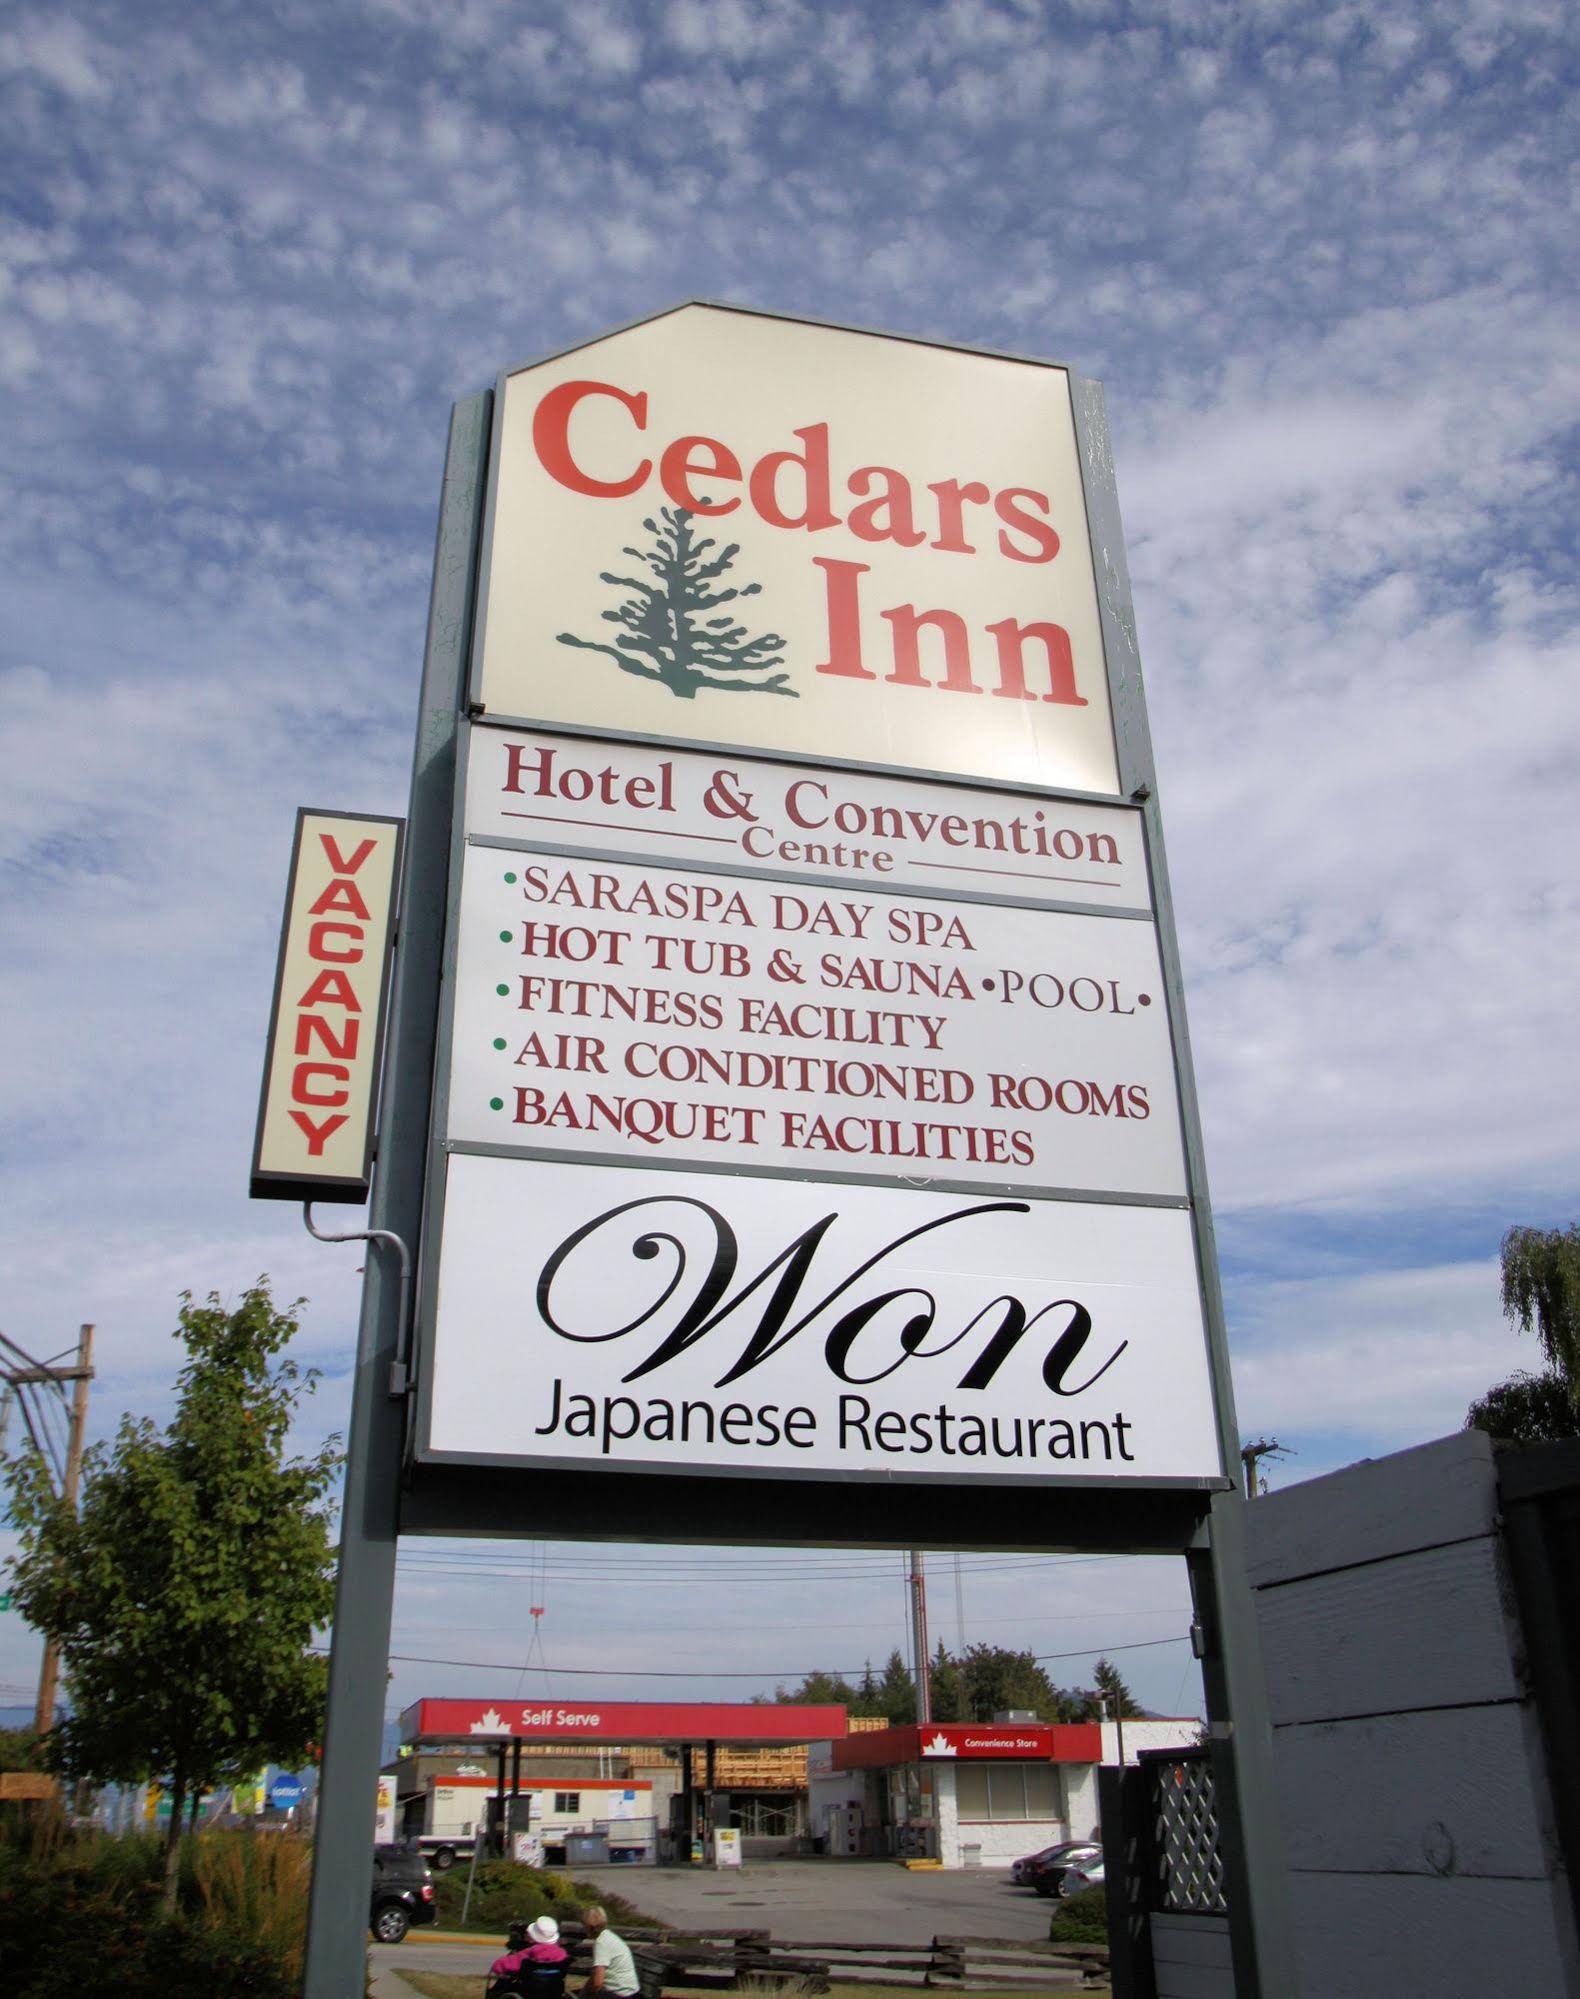 The Cedars Inn Hotel & Convention Centre